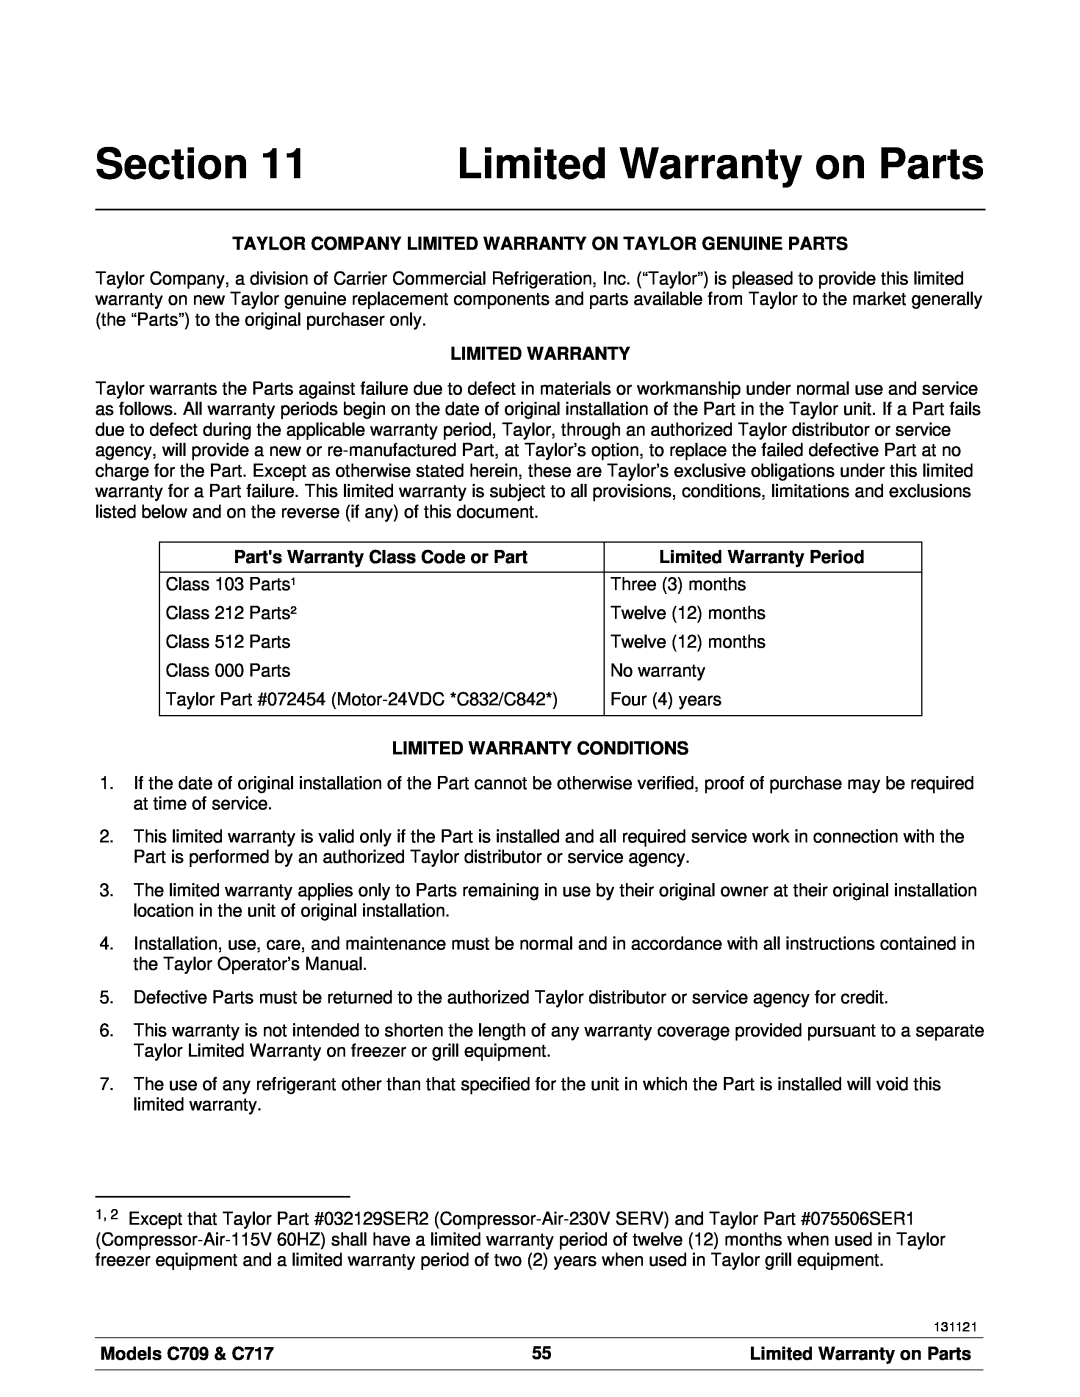 Taylor C717 Limited Warranty on Parts, Taylor Company Limited Warranty On Taylor Genuine Parts, Limited Warranty Period 